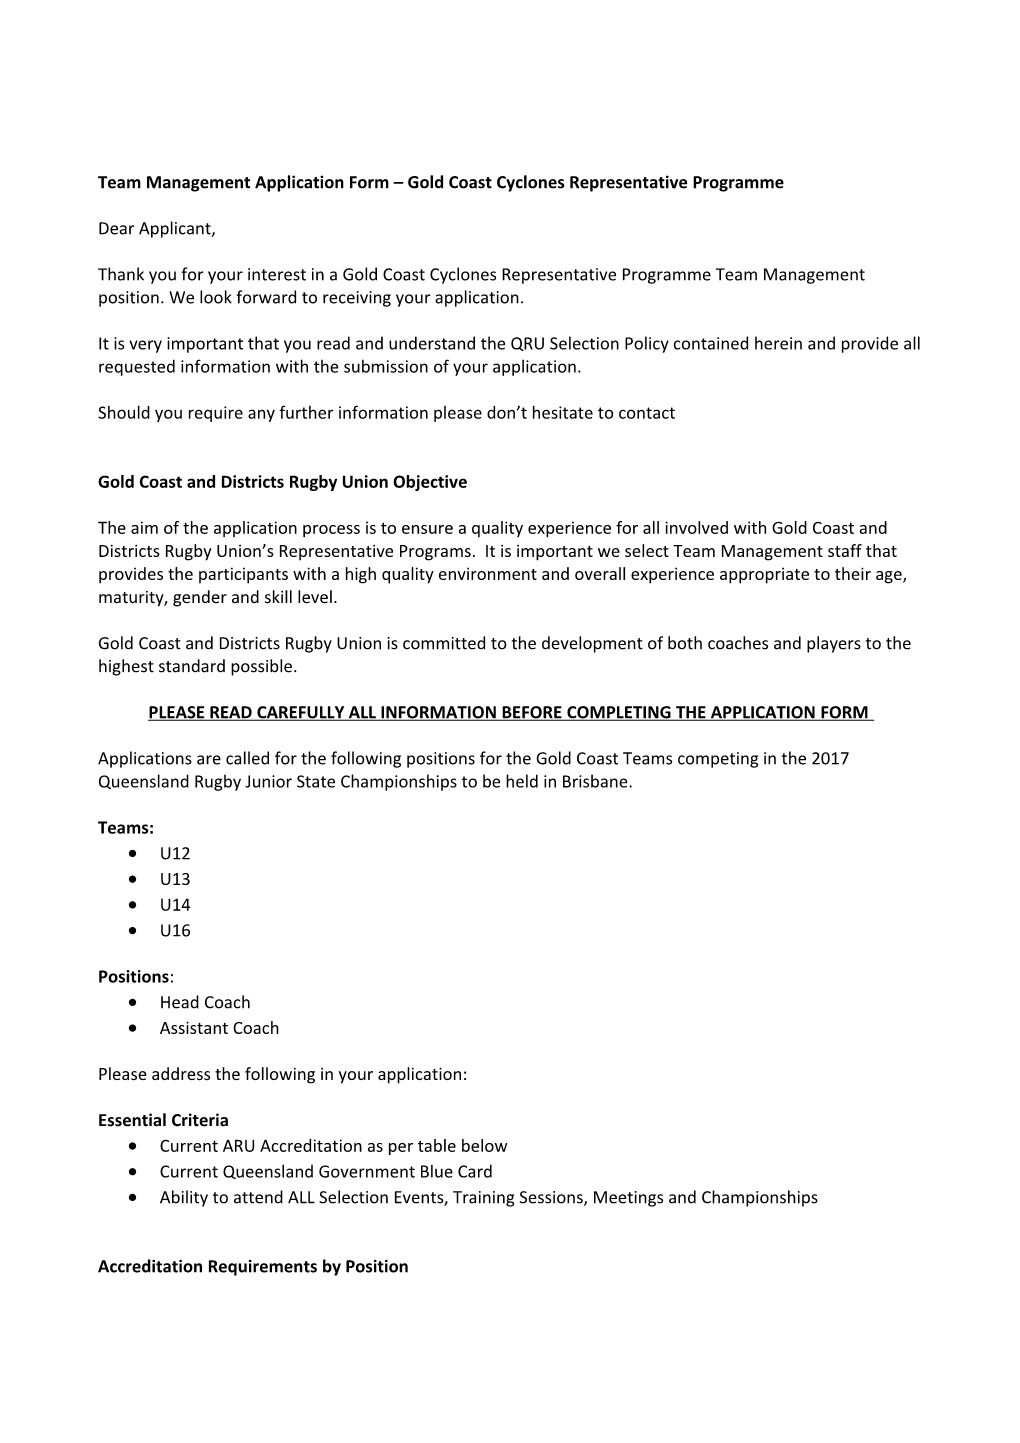 Team Management Application Form Gold Coastcyclones Representative Programme